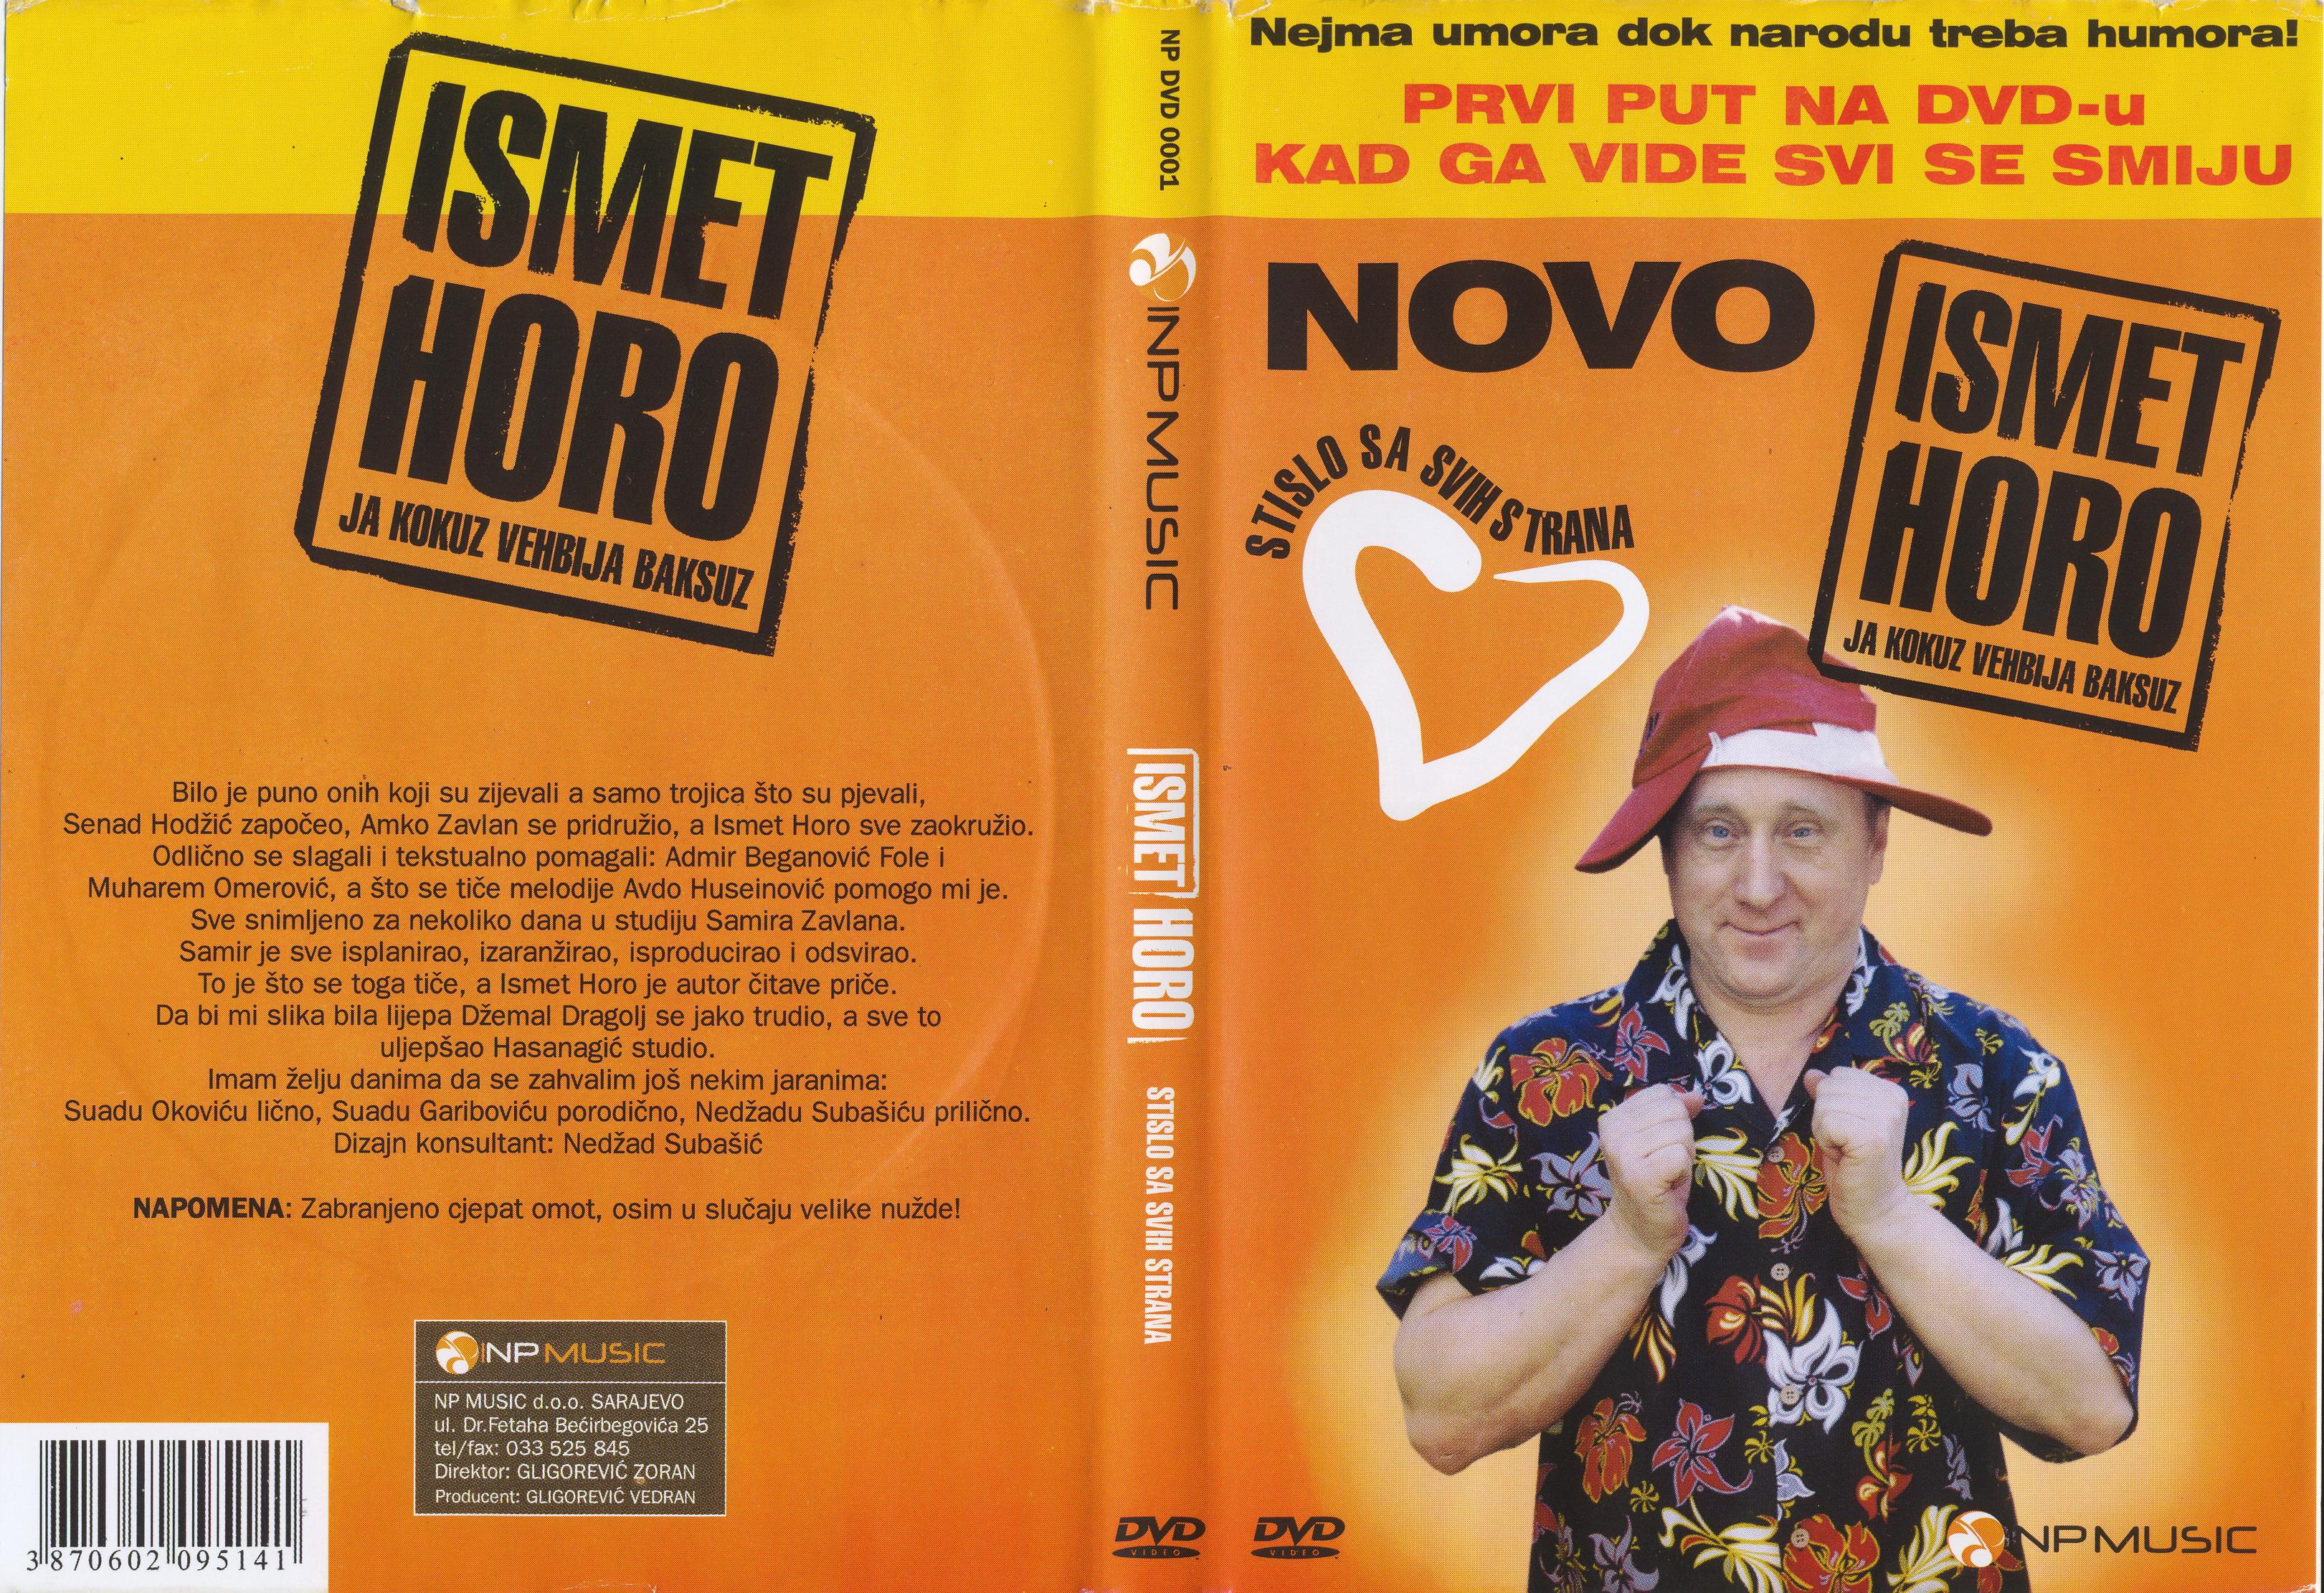 Click to view full size image -  DVD Cover - I - DVD - ISMET HORO - DVD - ISMET HORO.jpg